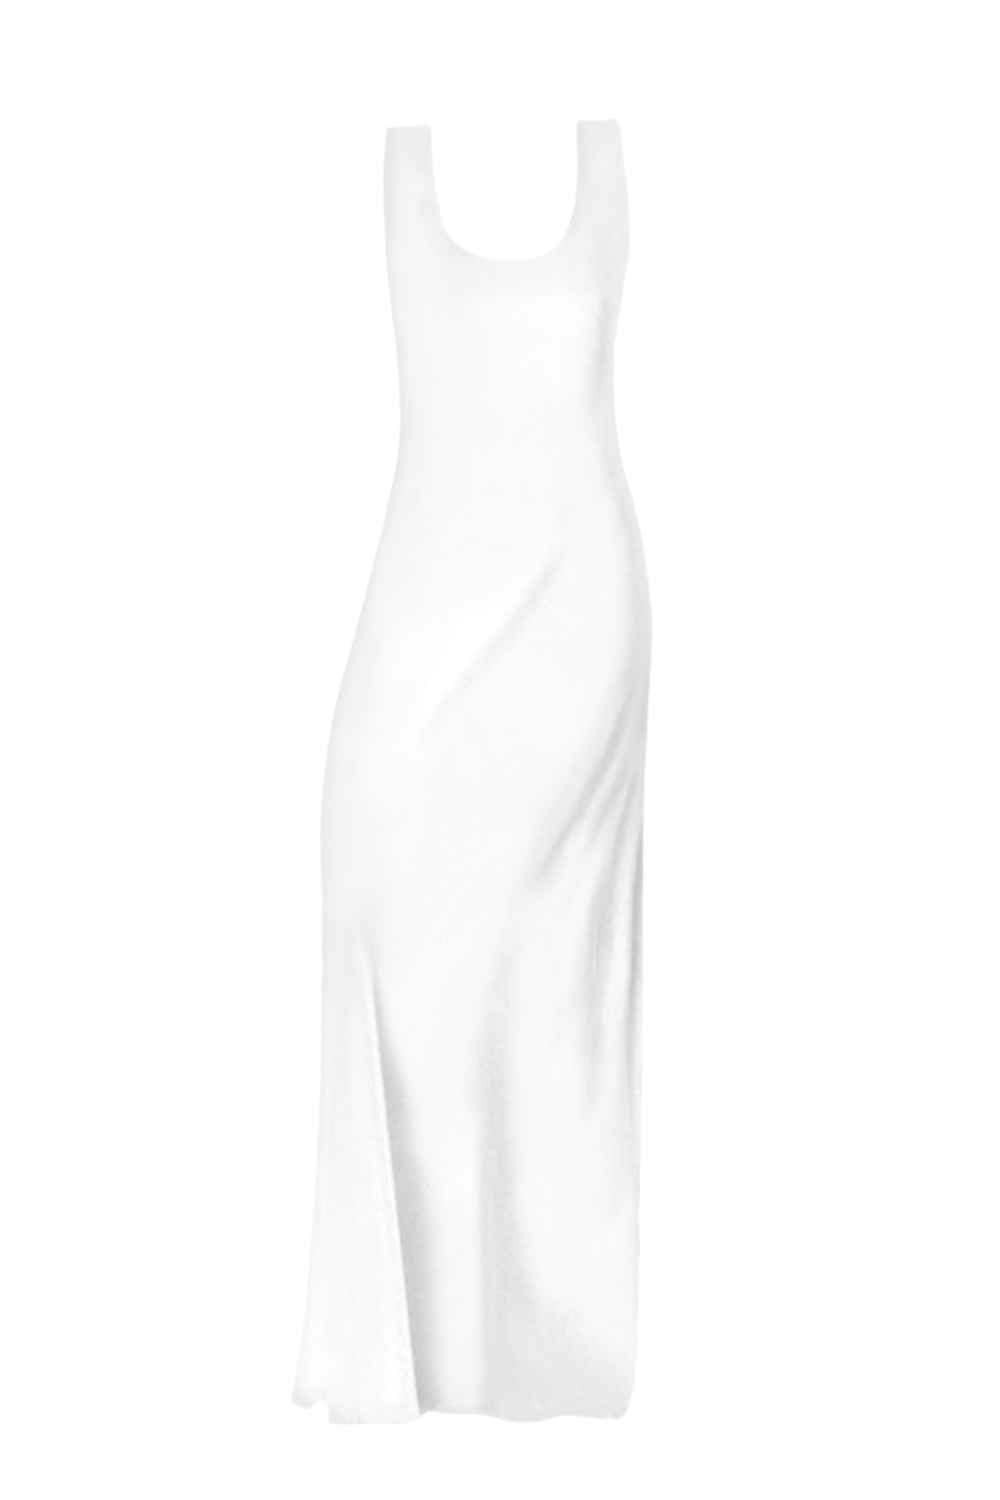 Viscose dress in white version 21-004